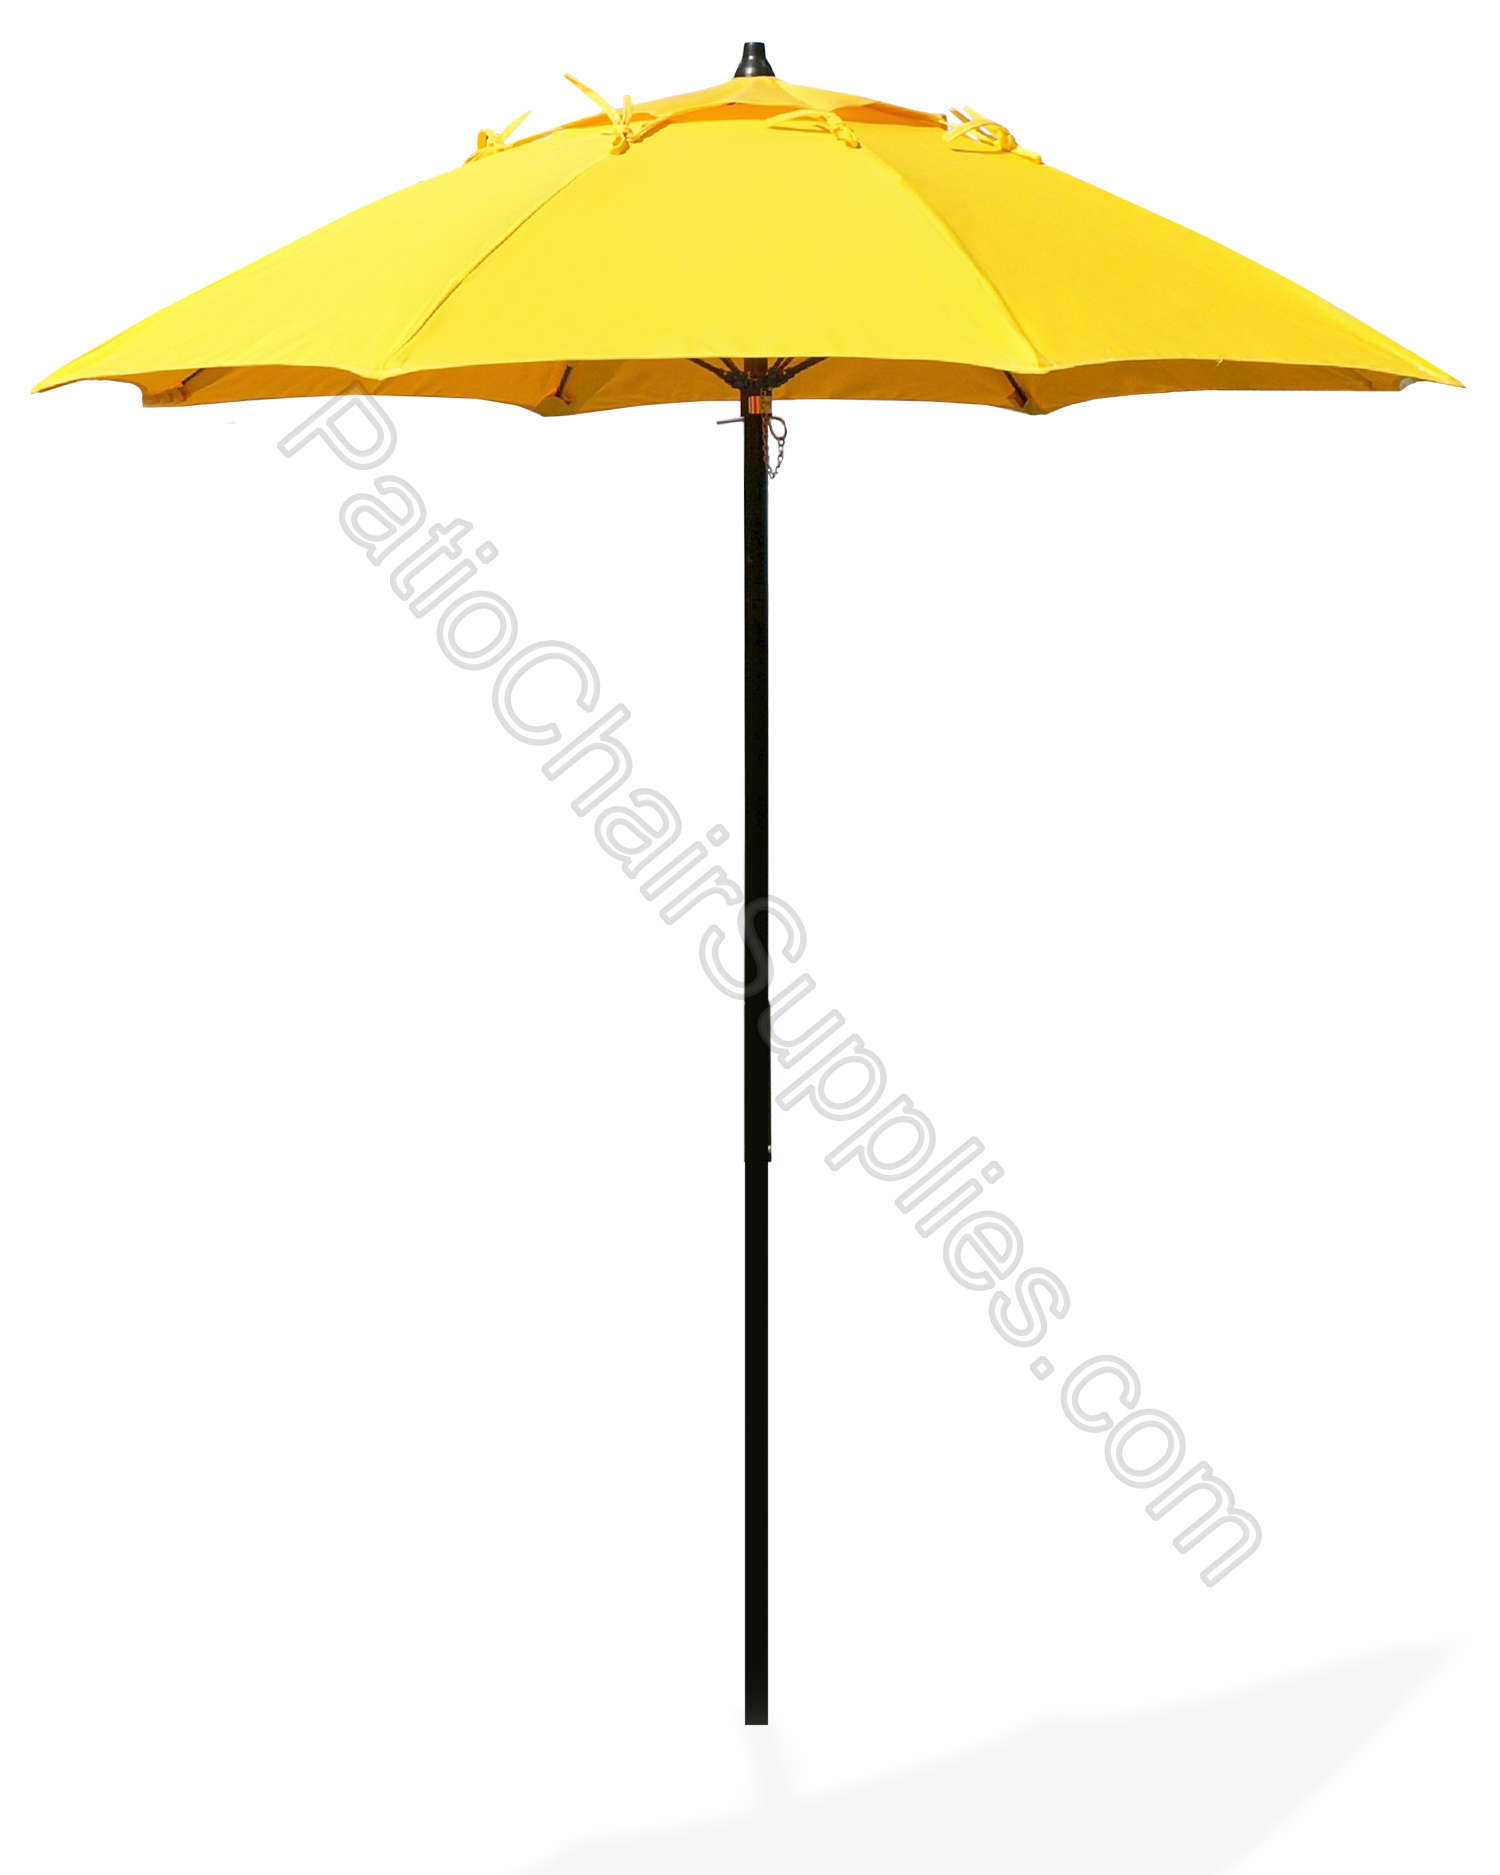 Las Olas umbrella